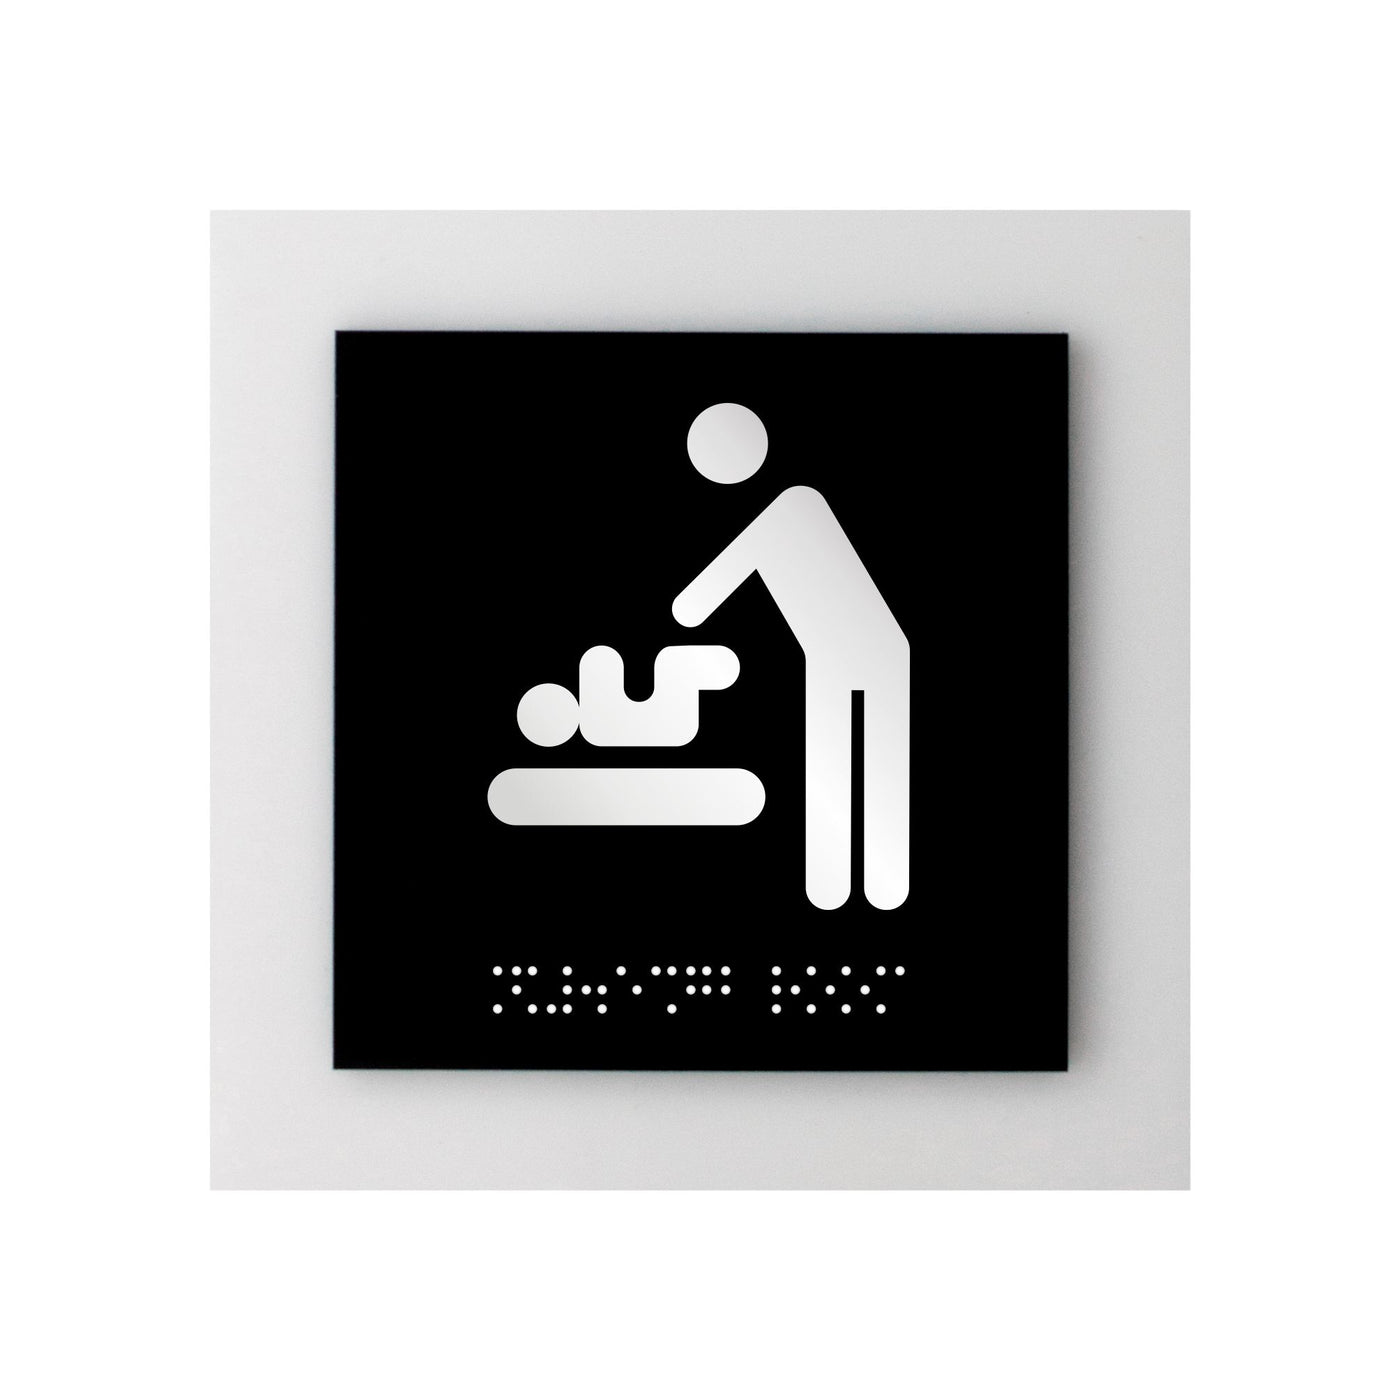 Acrylic Baby Change Sign - "Simple" Design